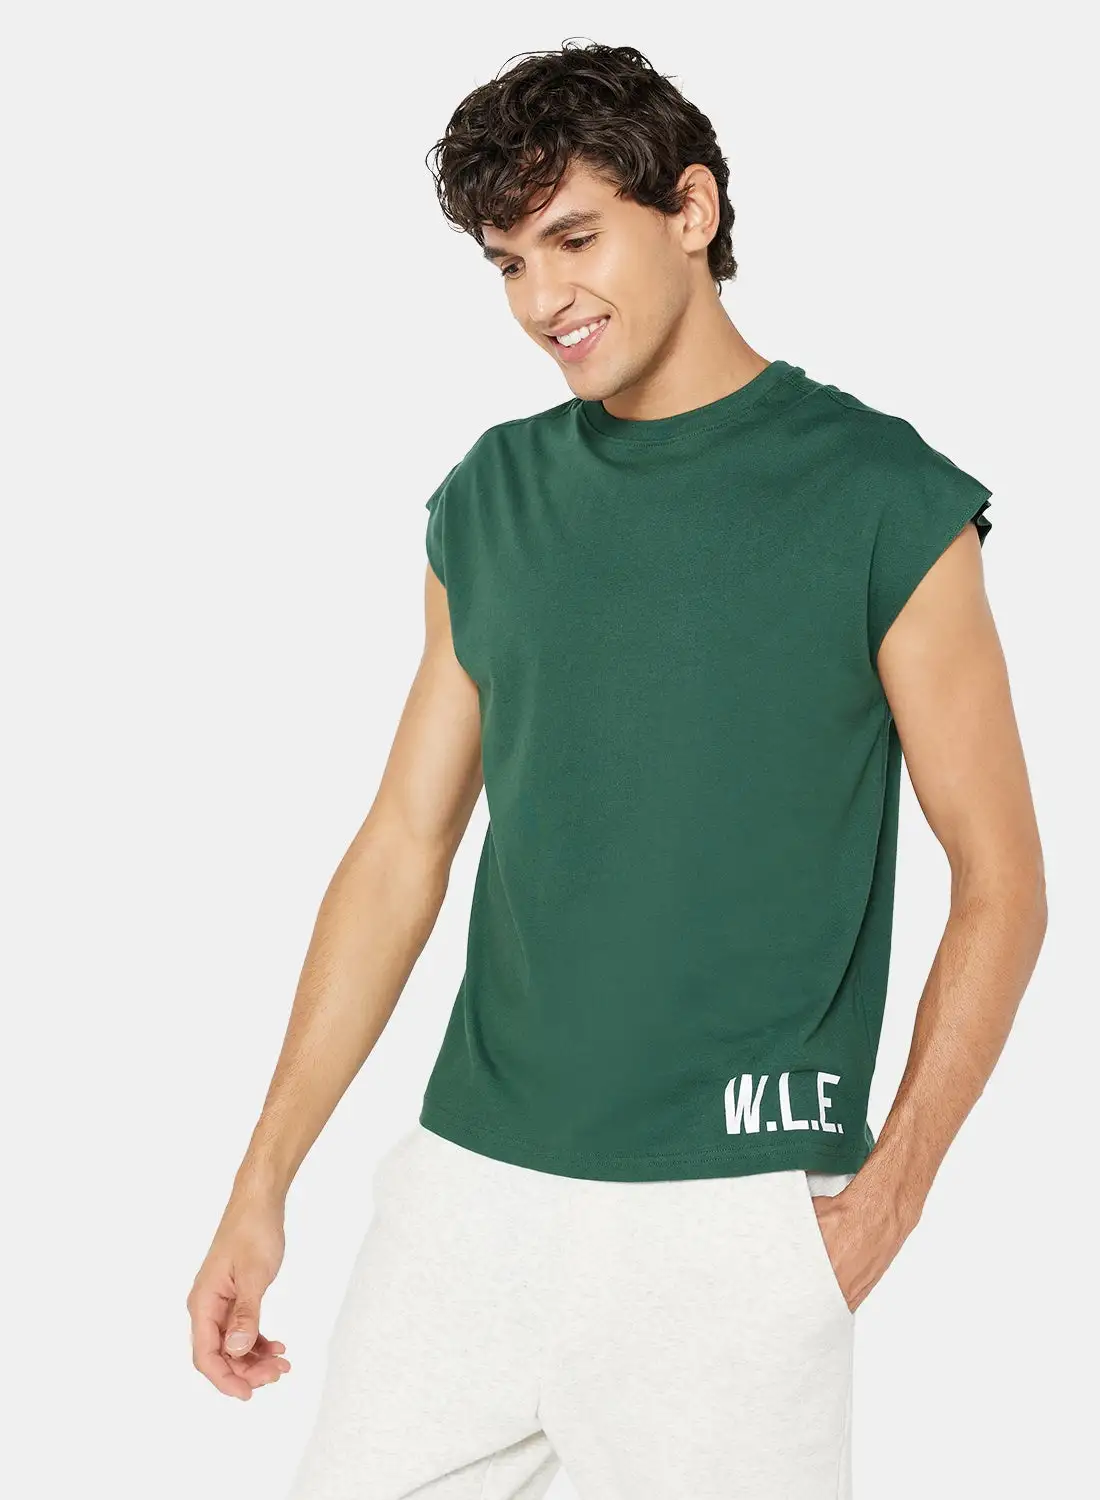 Sivvi x D'Atelier Eco-Friendly Logo Cap Sleeve T-Shirt Dark Green